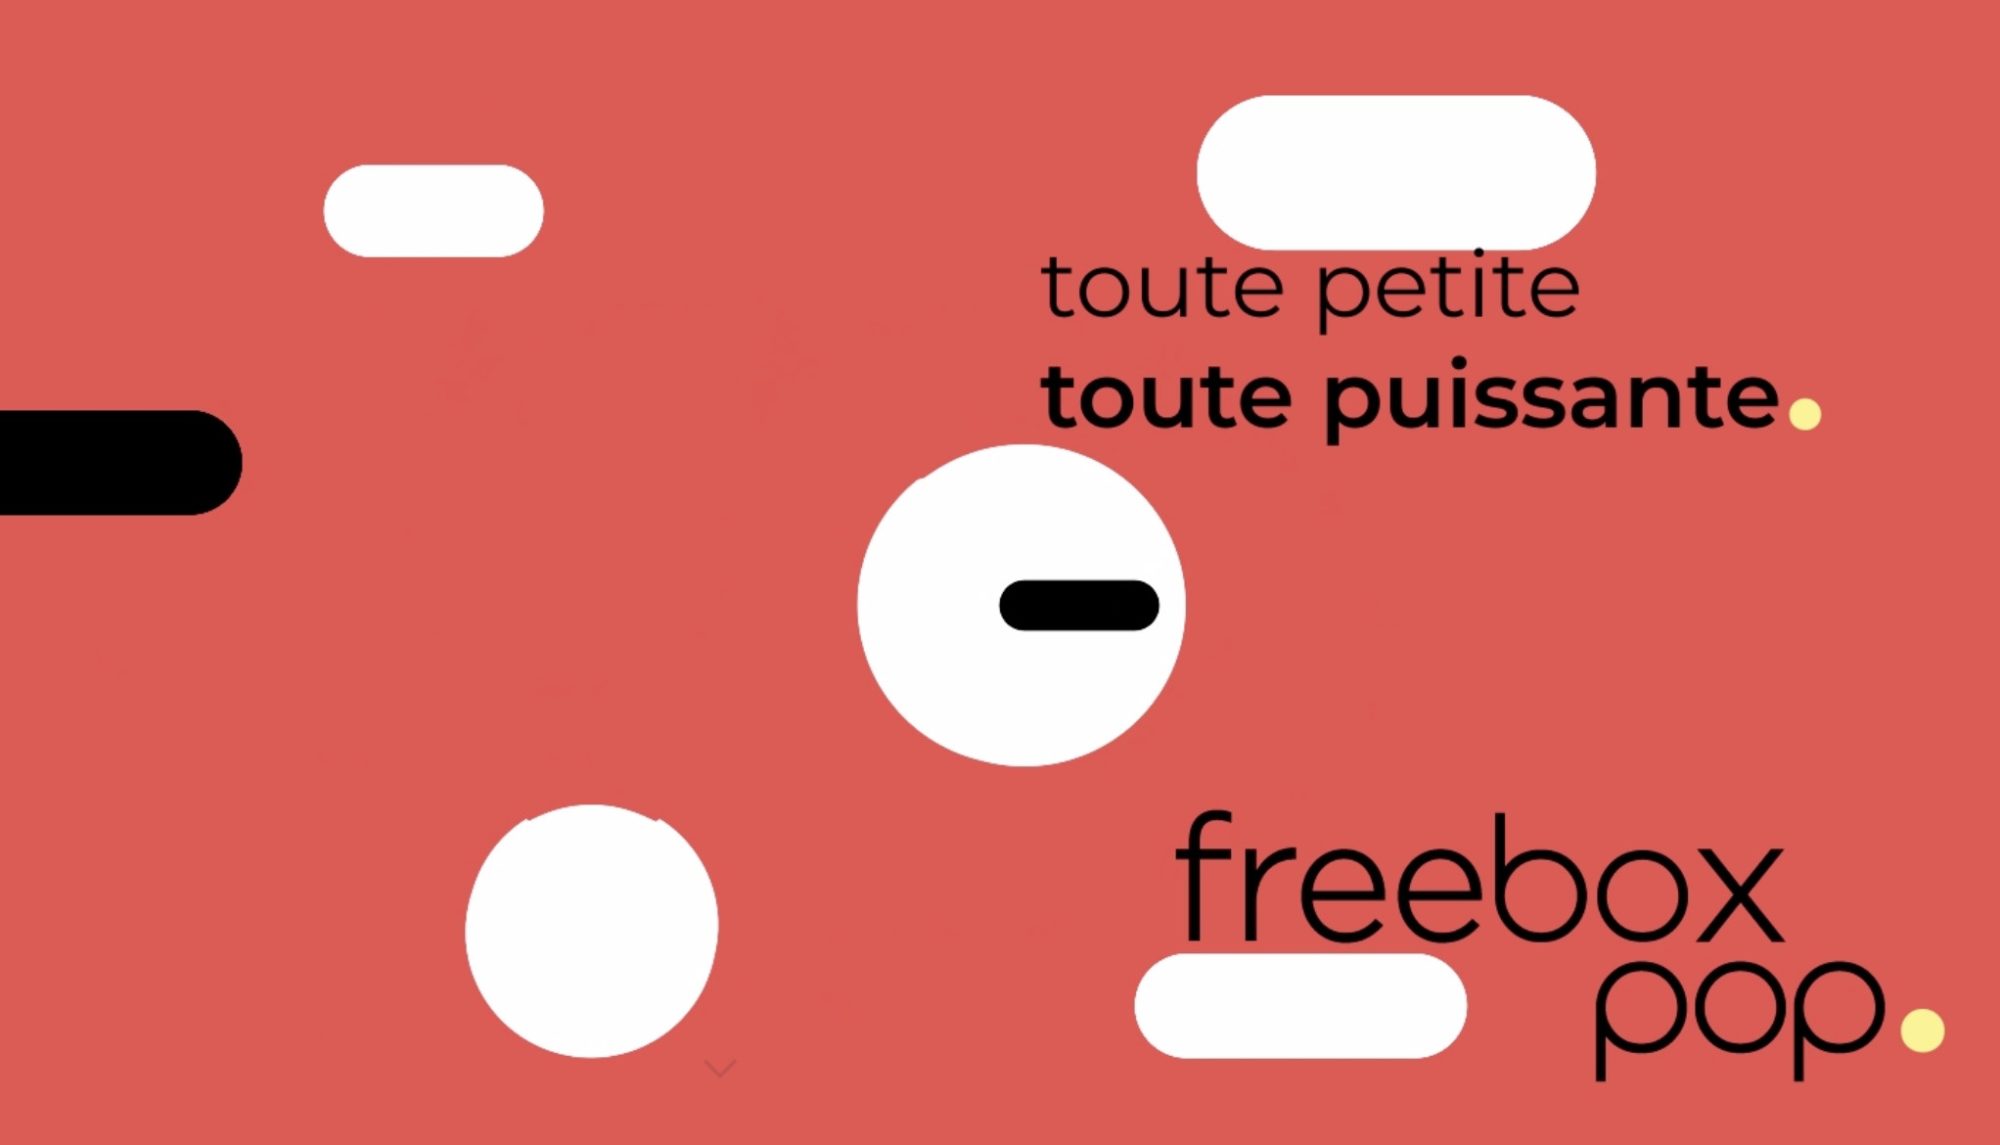 freebox pop free visuel - Netflix sera disponible sur la Freebox Pop dès sa sortie